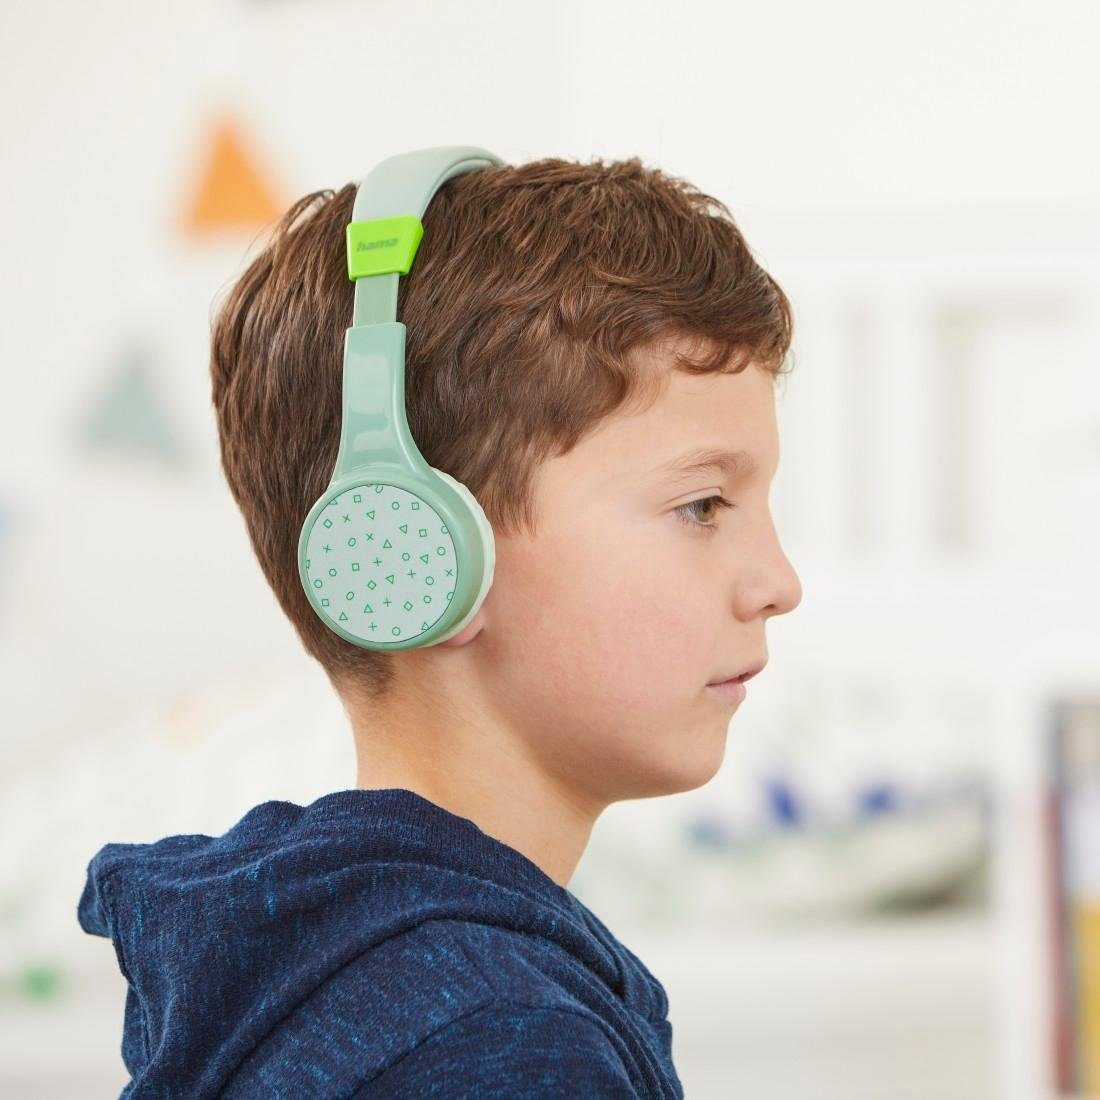 Hama Teens Lautstärkebegrenzung Kinder-Kopfhörer Bluetooth®-Kinderkopfhörer Guard, grün On-Ear,